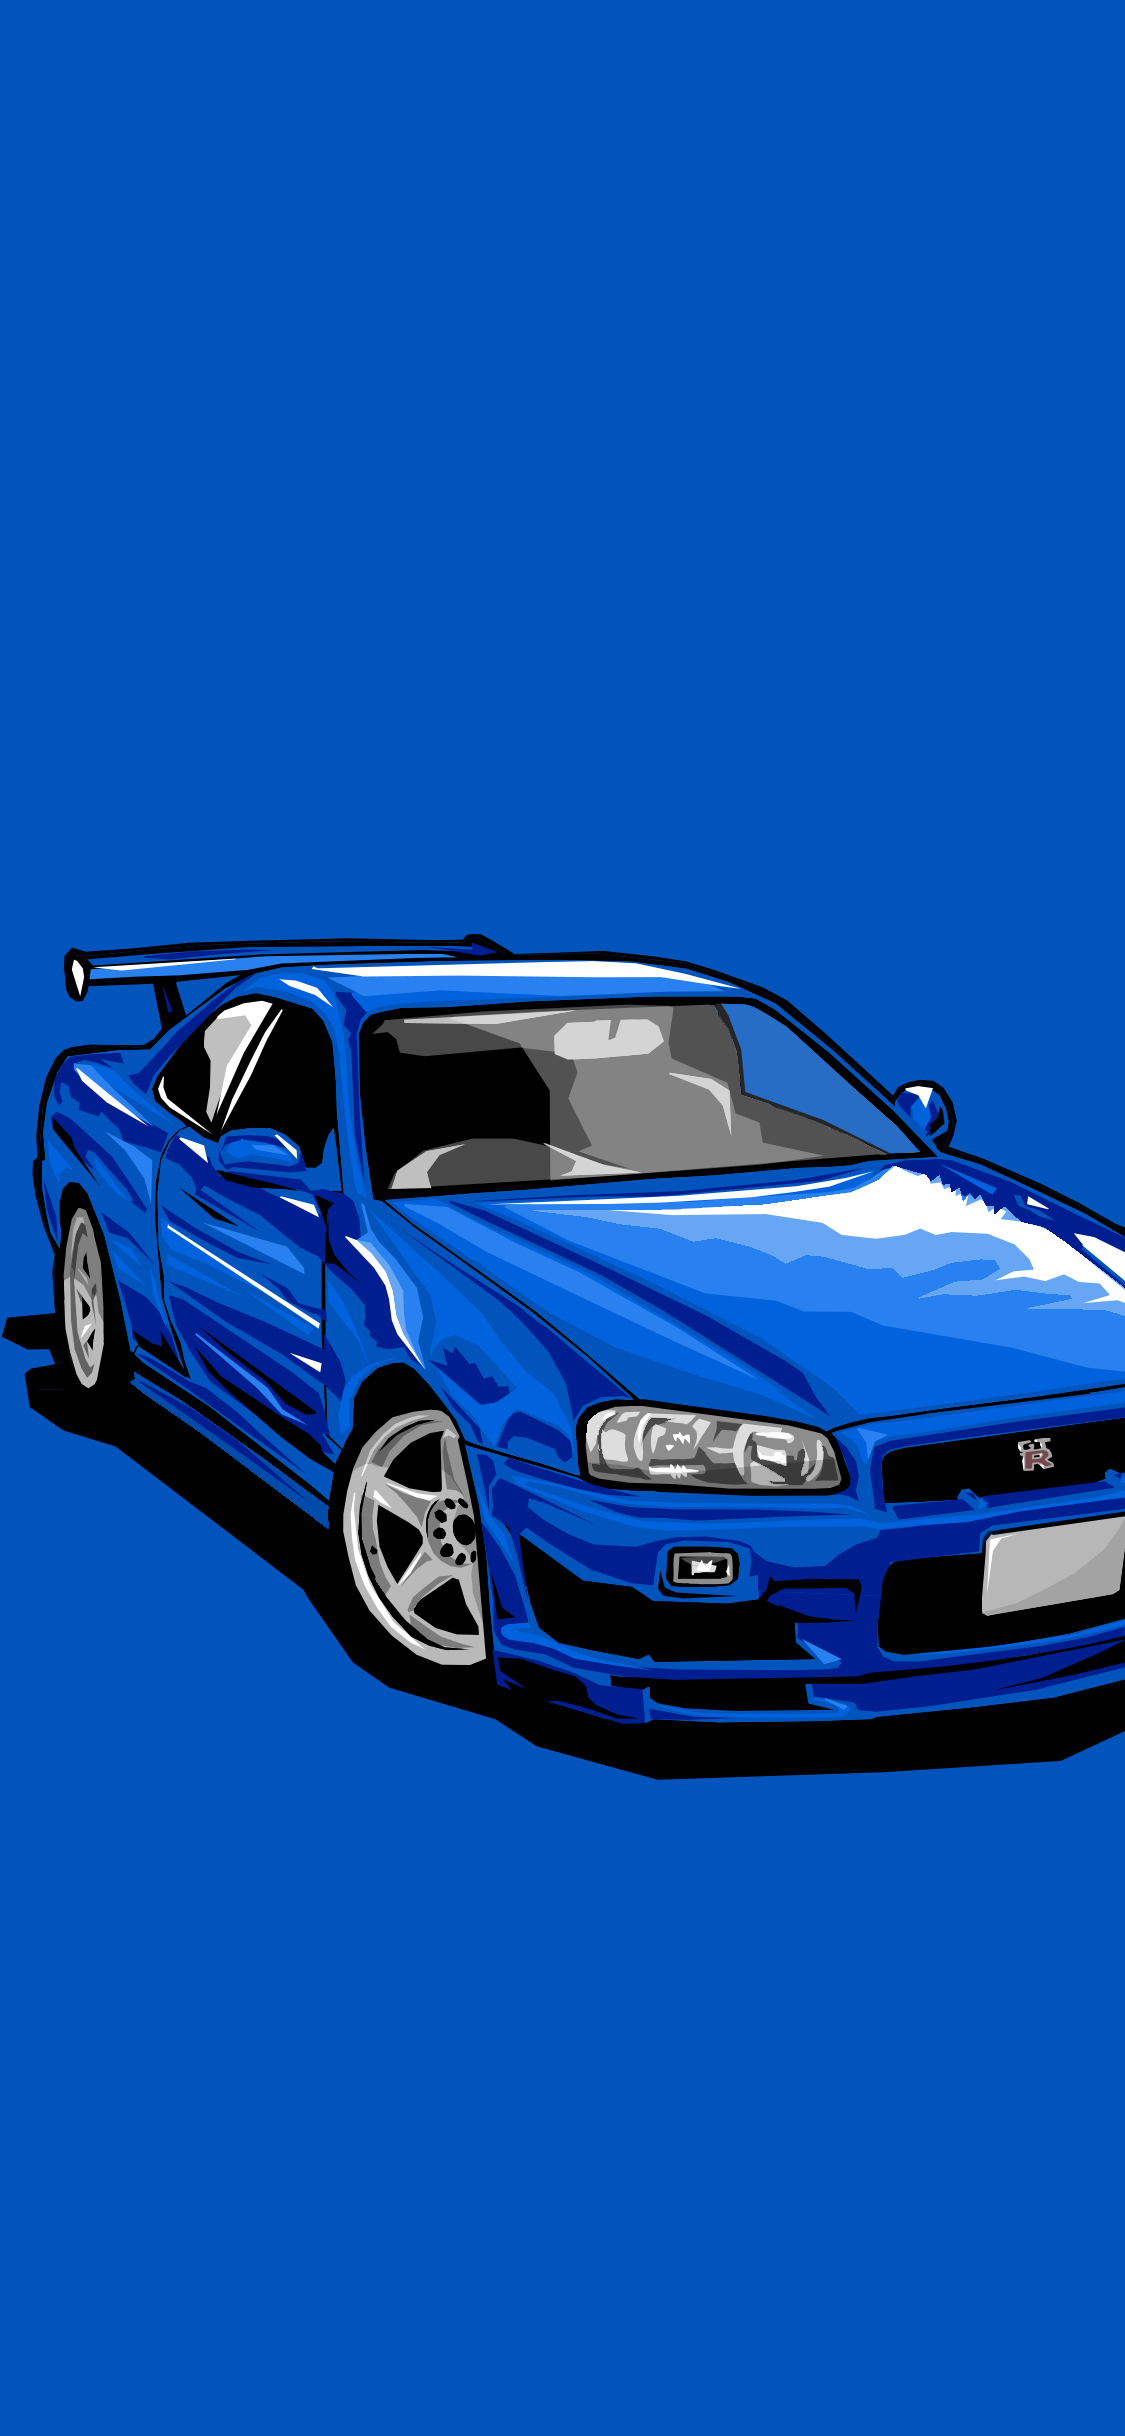 R34-wallpaper - Blue Car Wallpaper Iphone - 1125x2436 Wallpaper - teahub.io